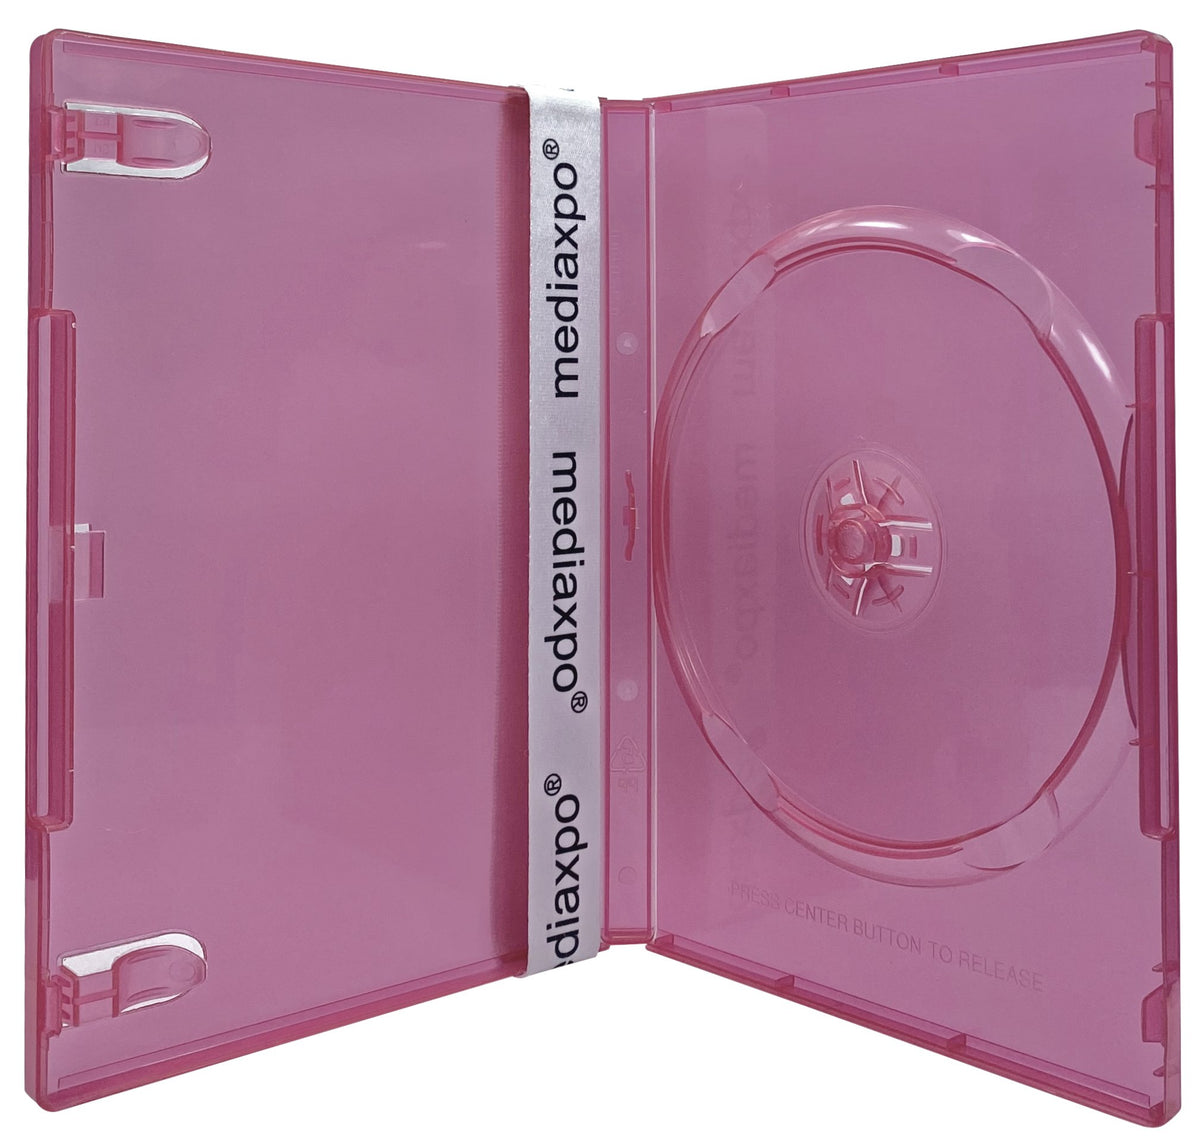 (200) CheckOutStore Premium Standard Double 2-Disc DVD Cases 14mm (Black  (Inner Flap))